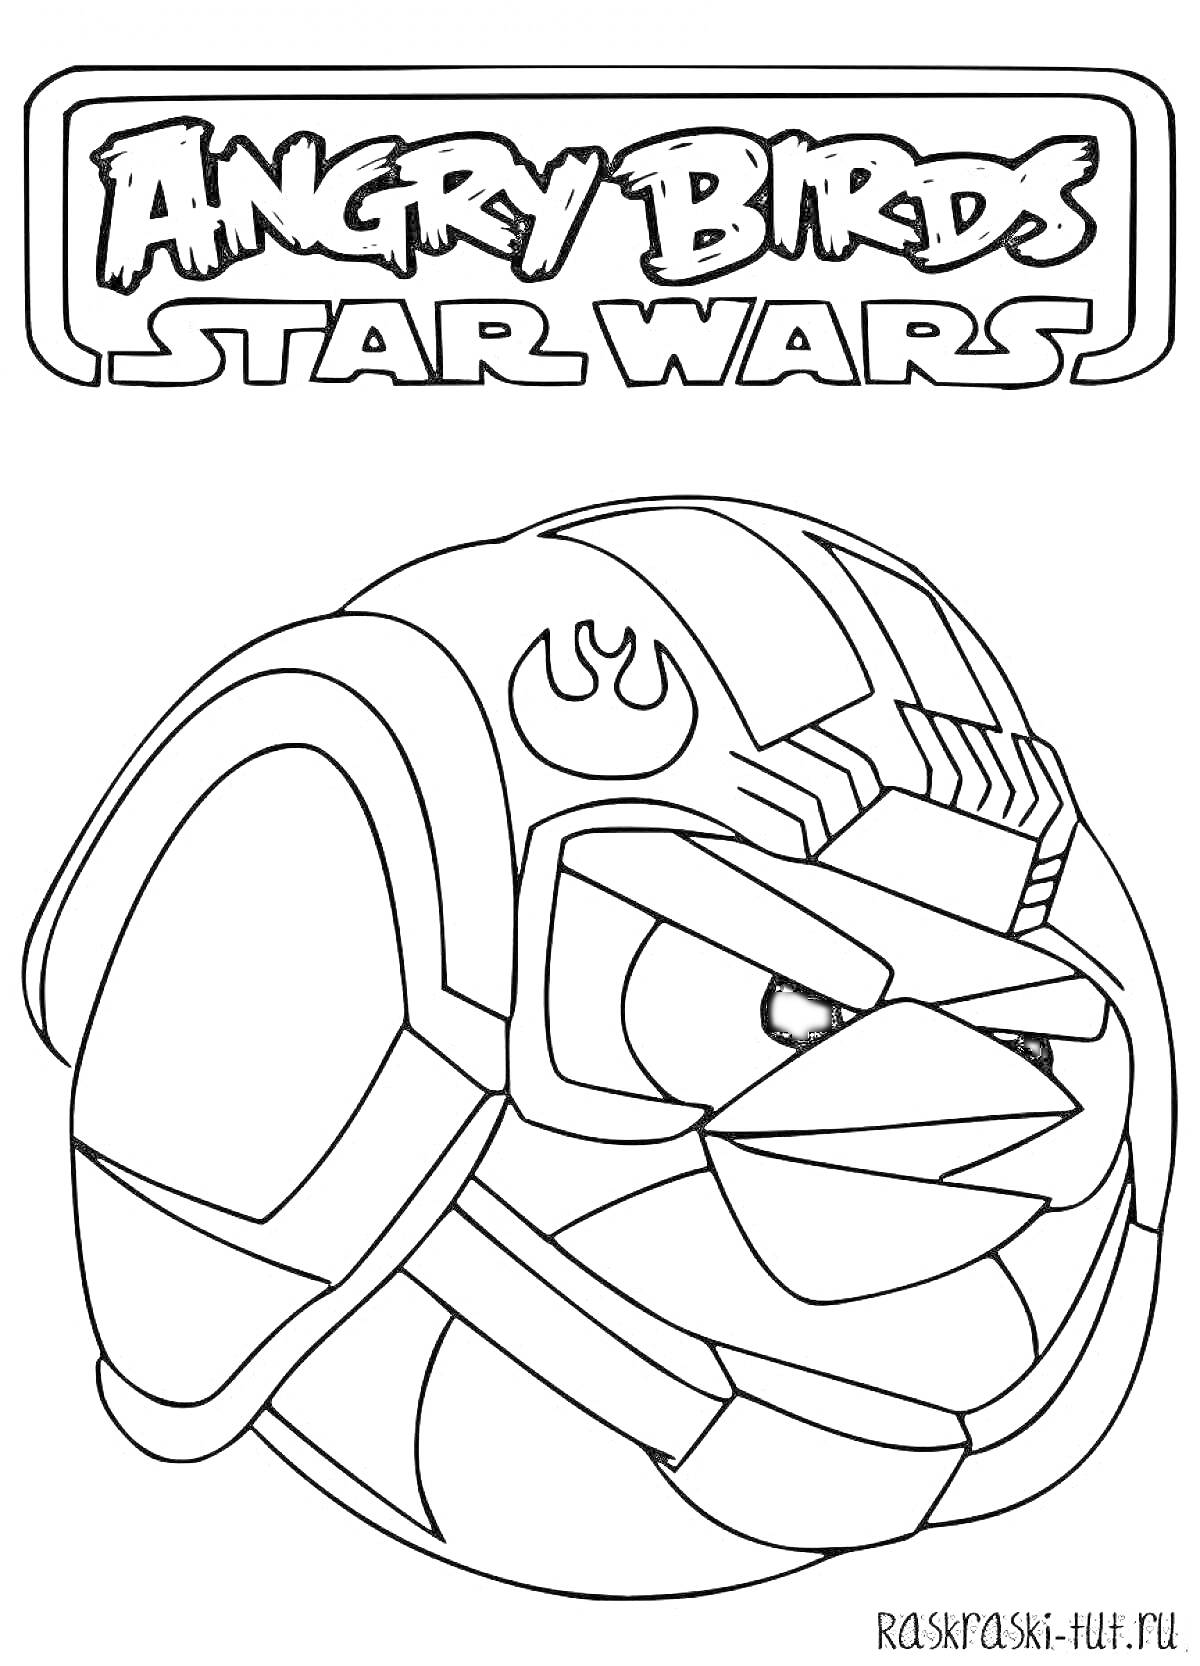 Раскраска Angry Birds Star Wars с персонажем в шлеме пилота